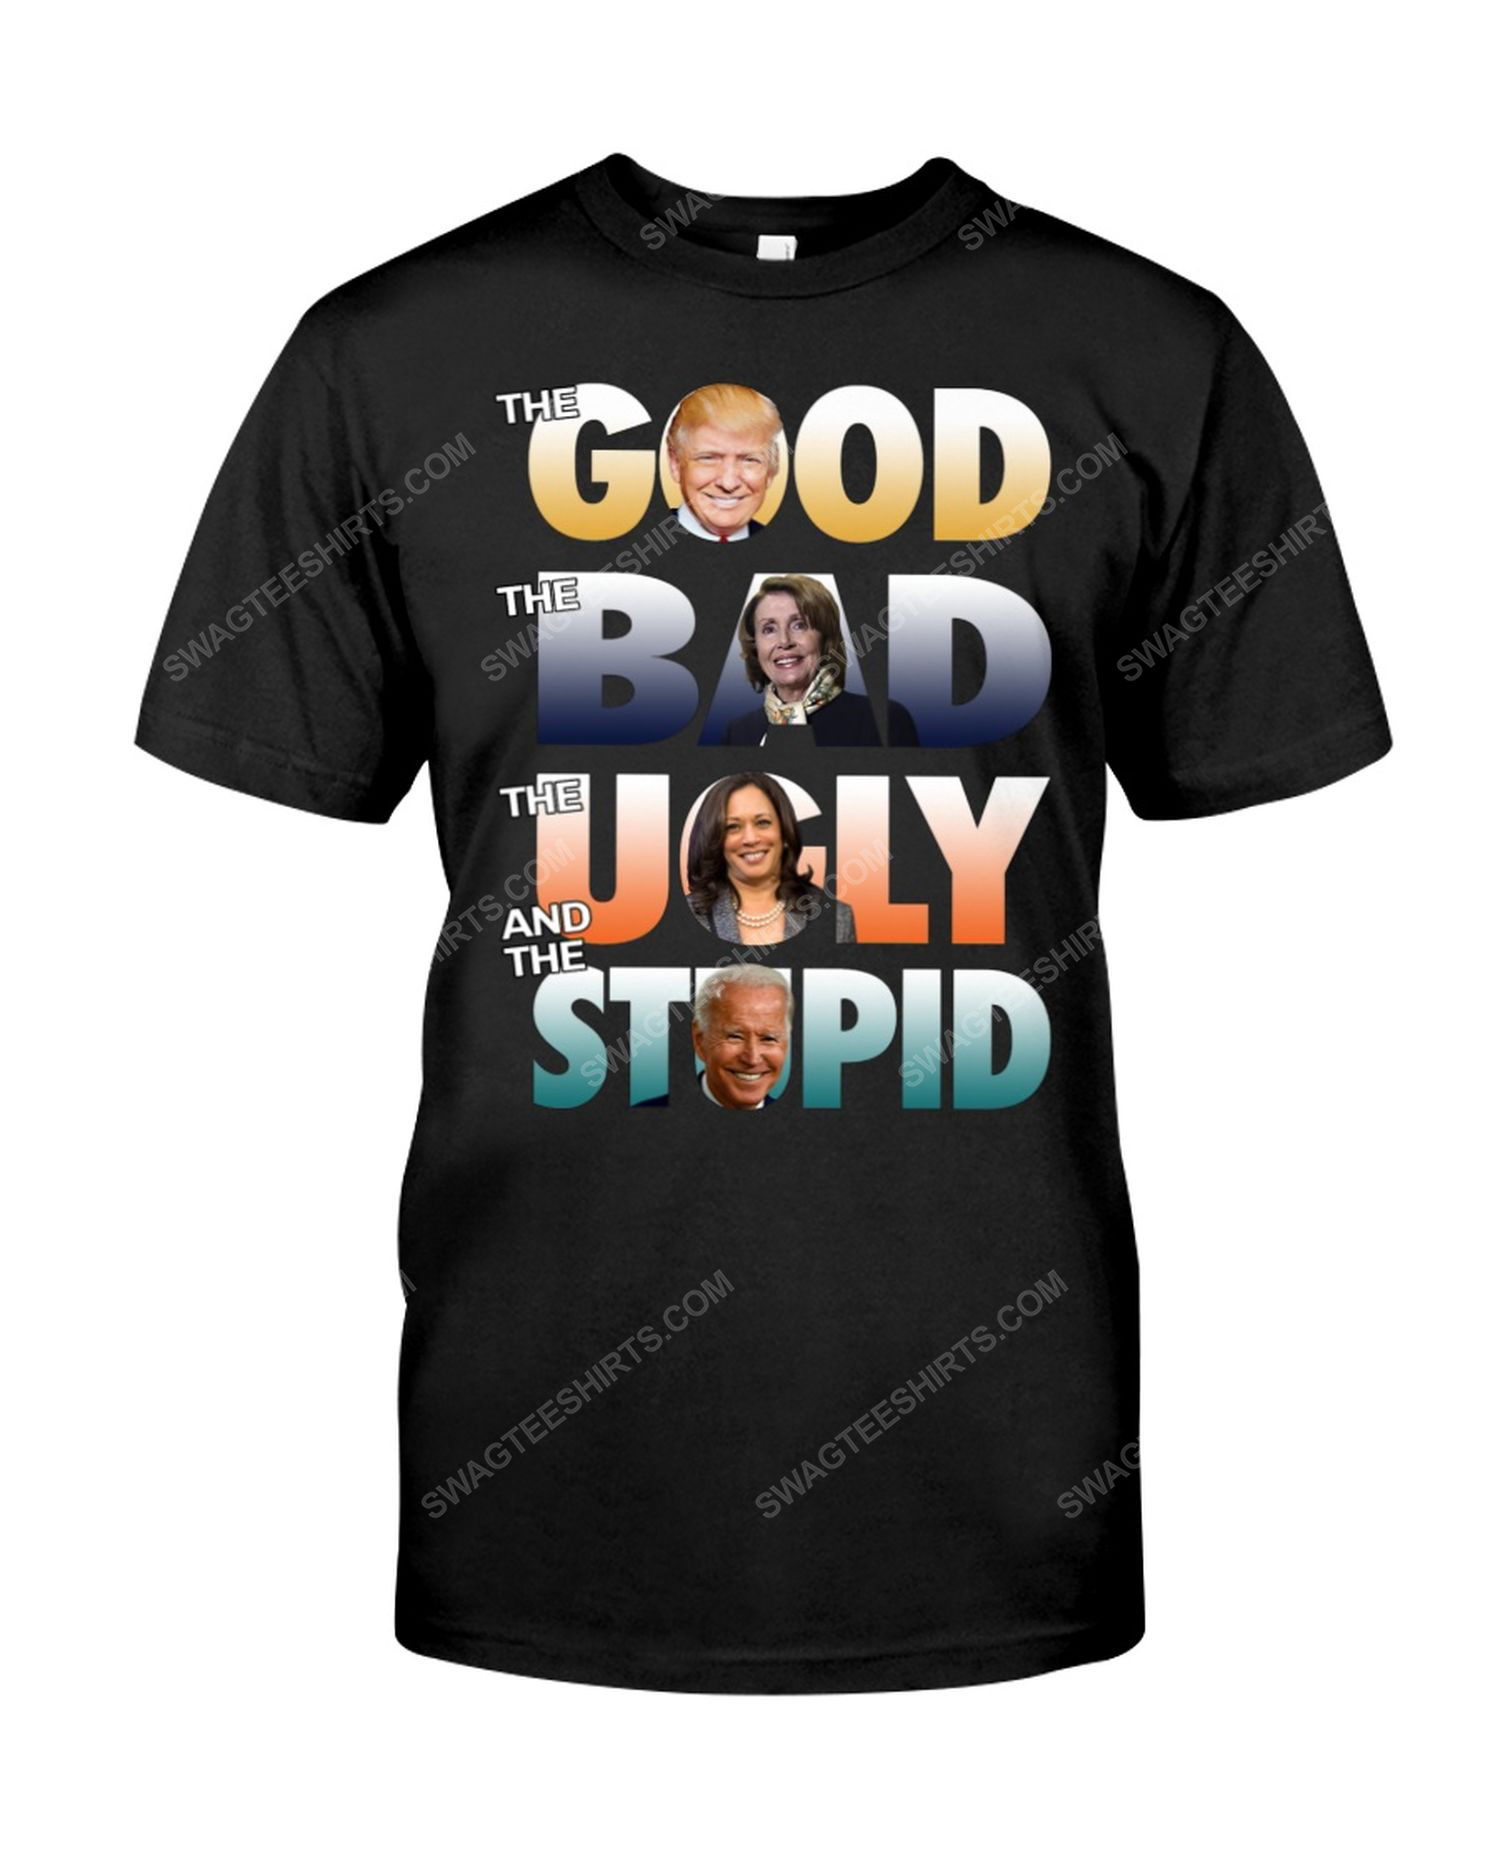 Trump the good biden the bad kamala the ugly and the stupid political tshirt